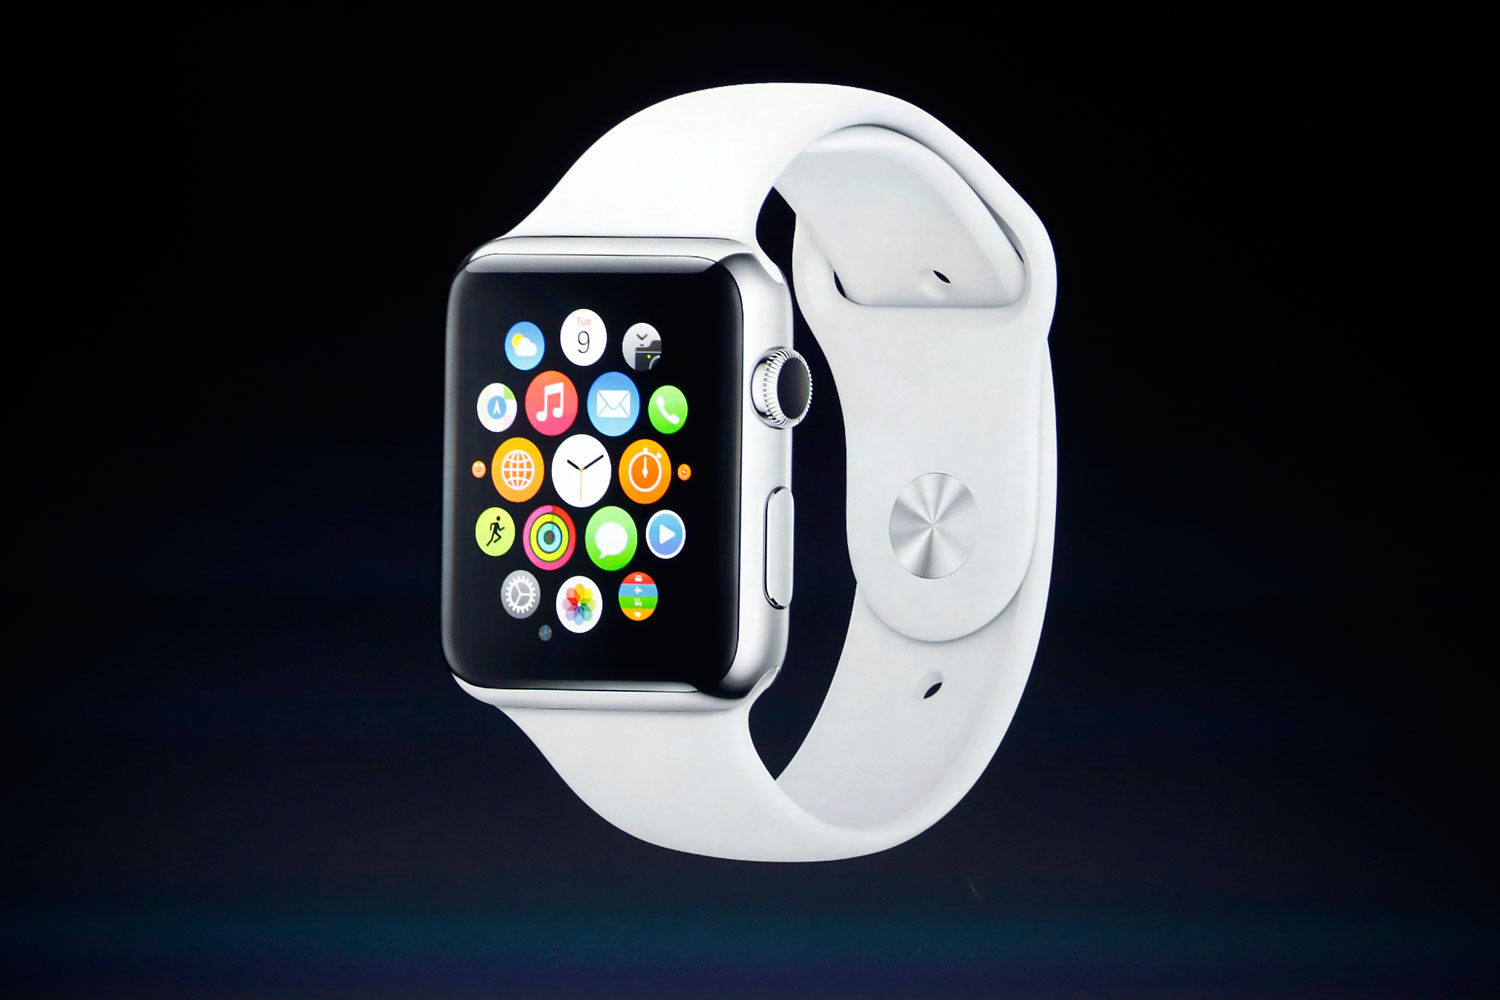 Apple Smart Watch Series 5